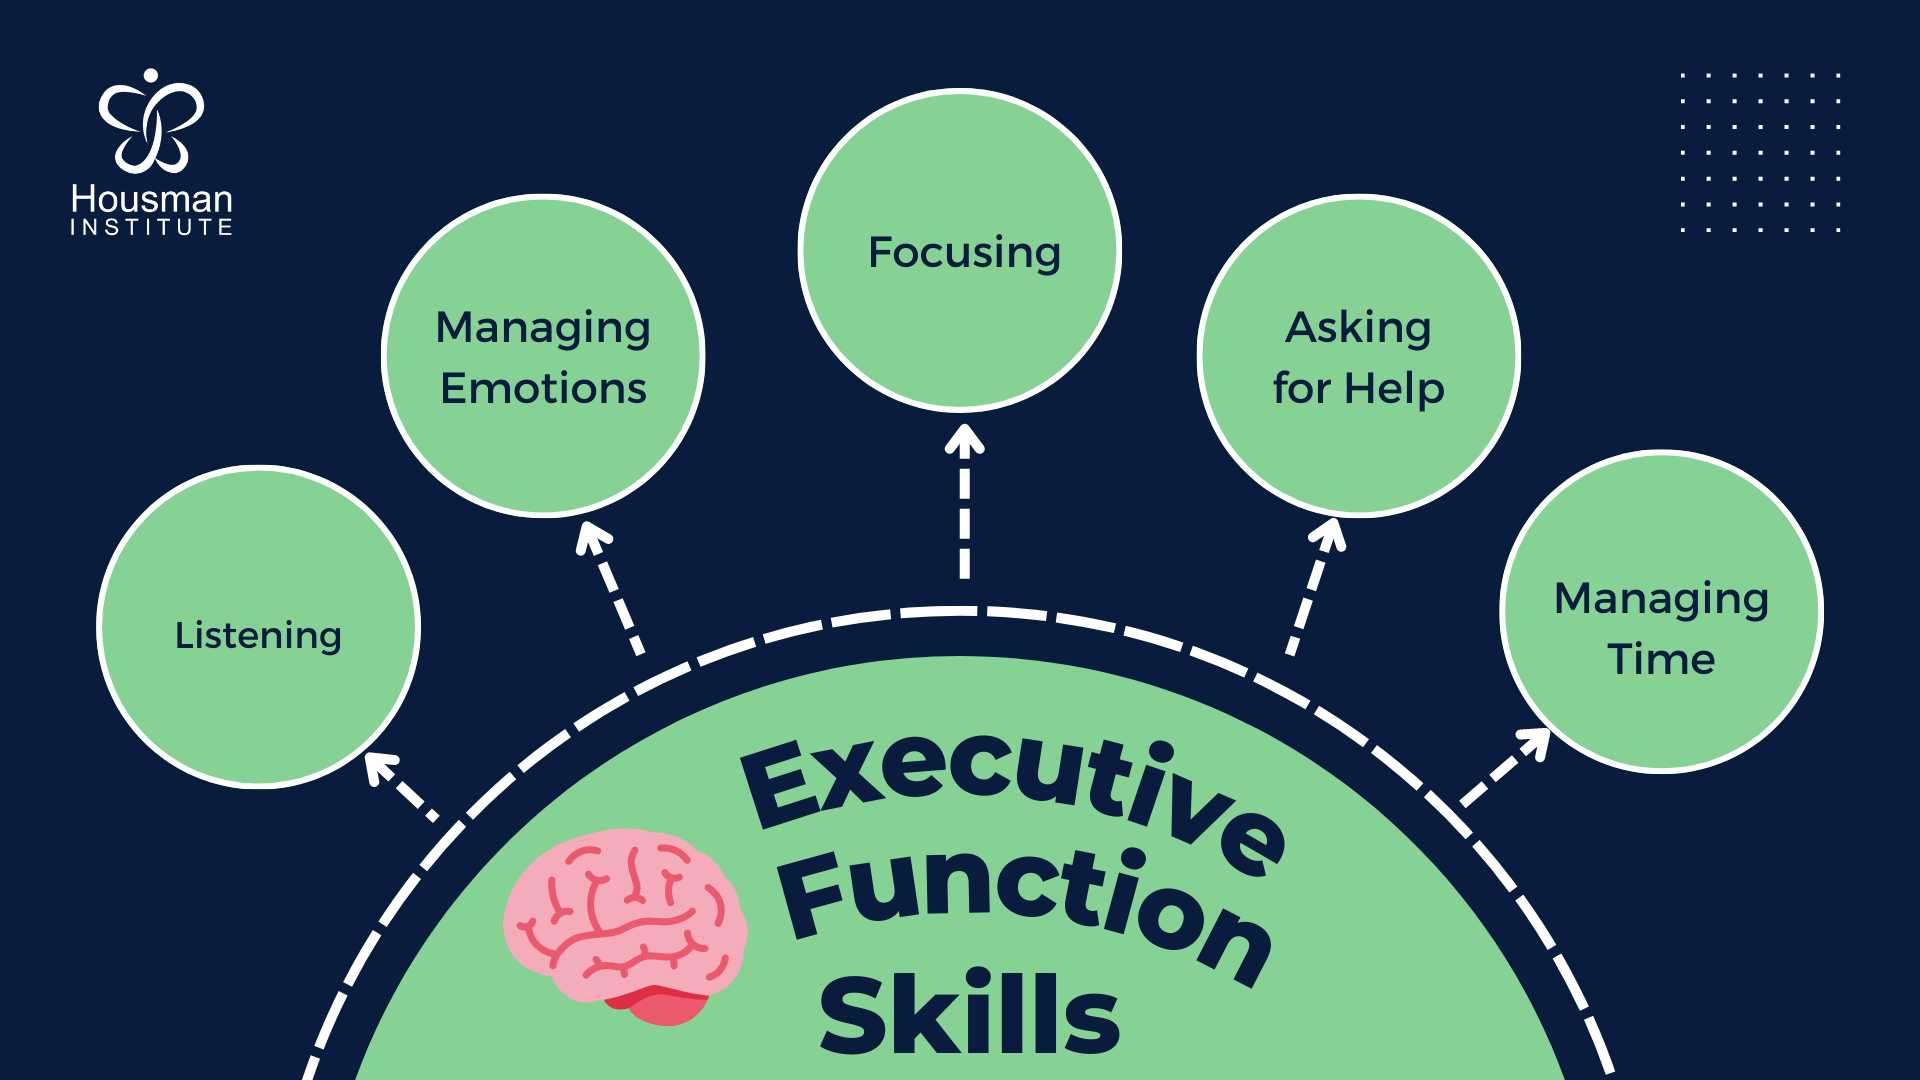 Executive Function Skills